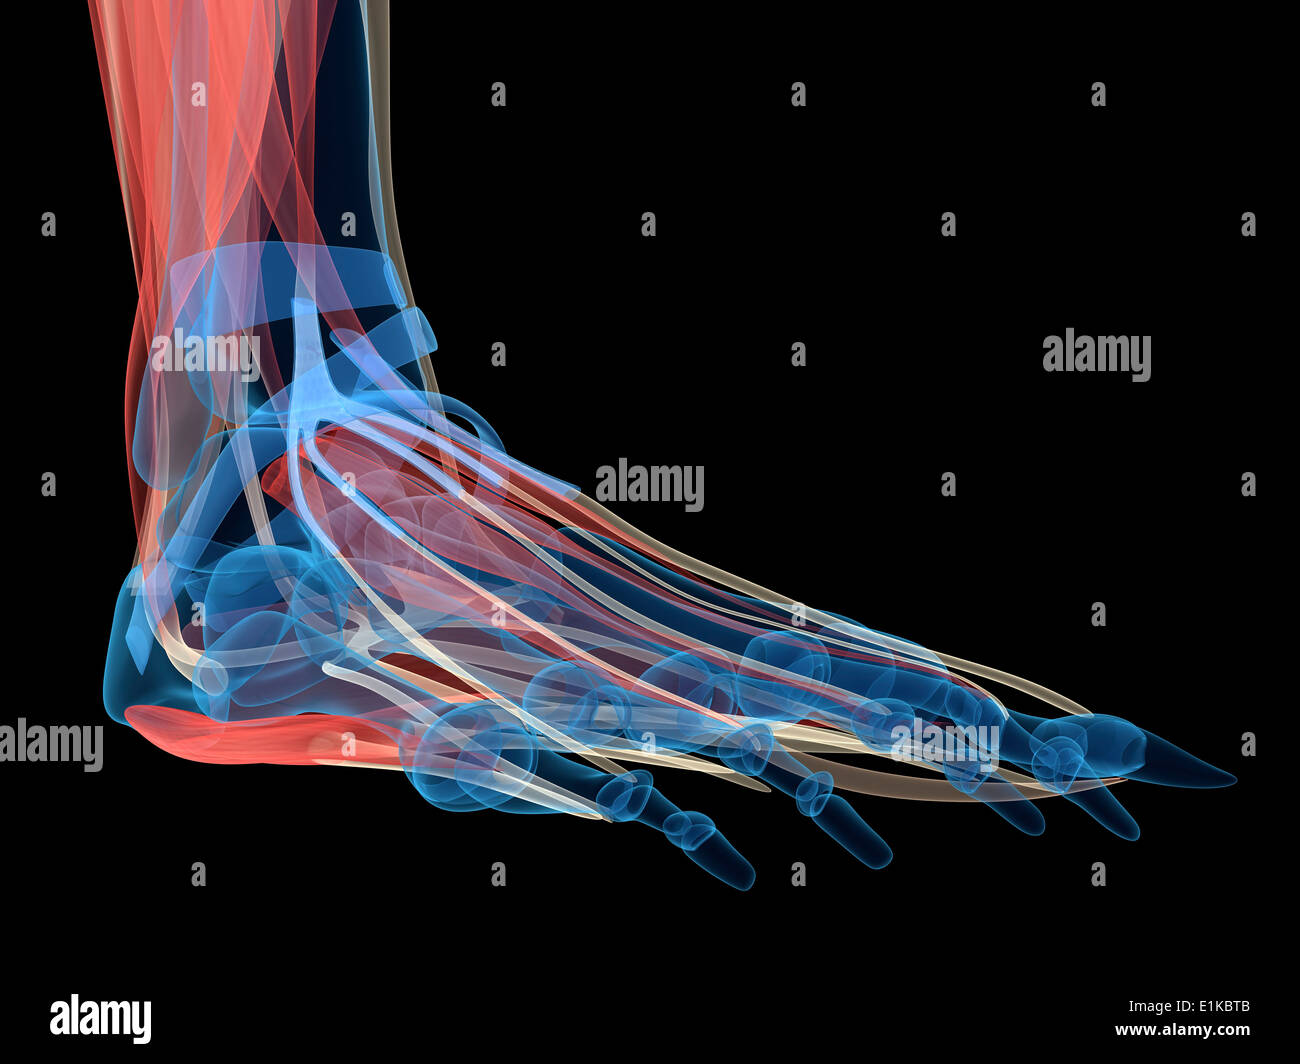 Human foot anatomy computer artwork. Stock Photo